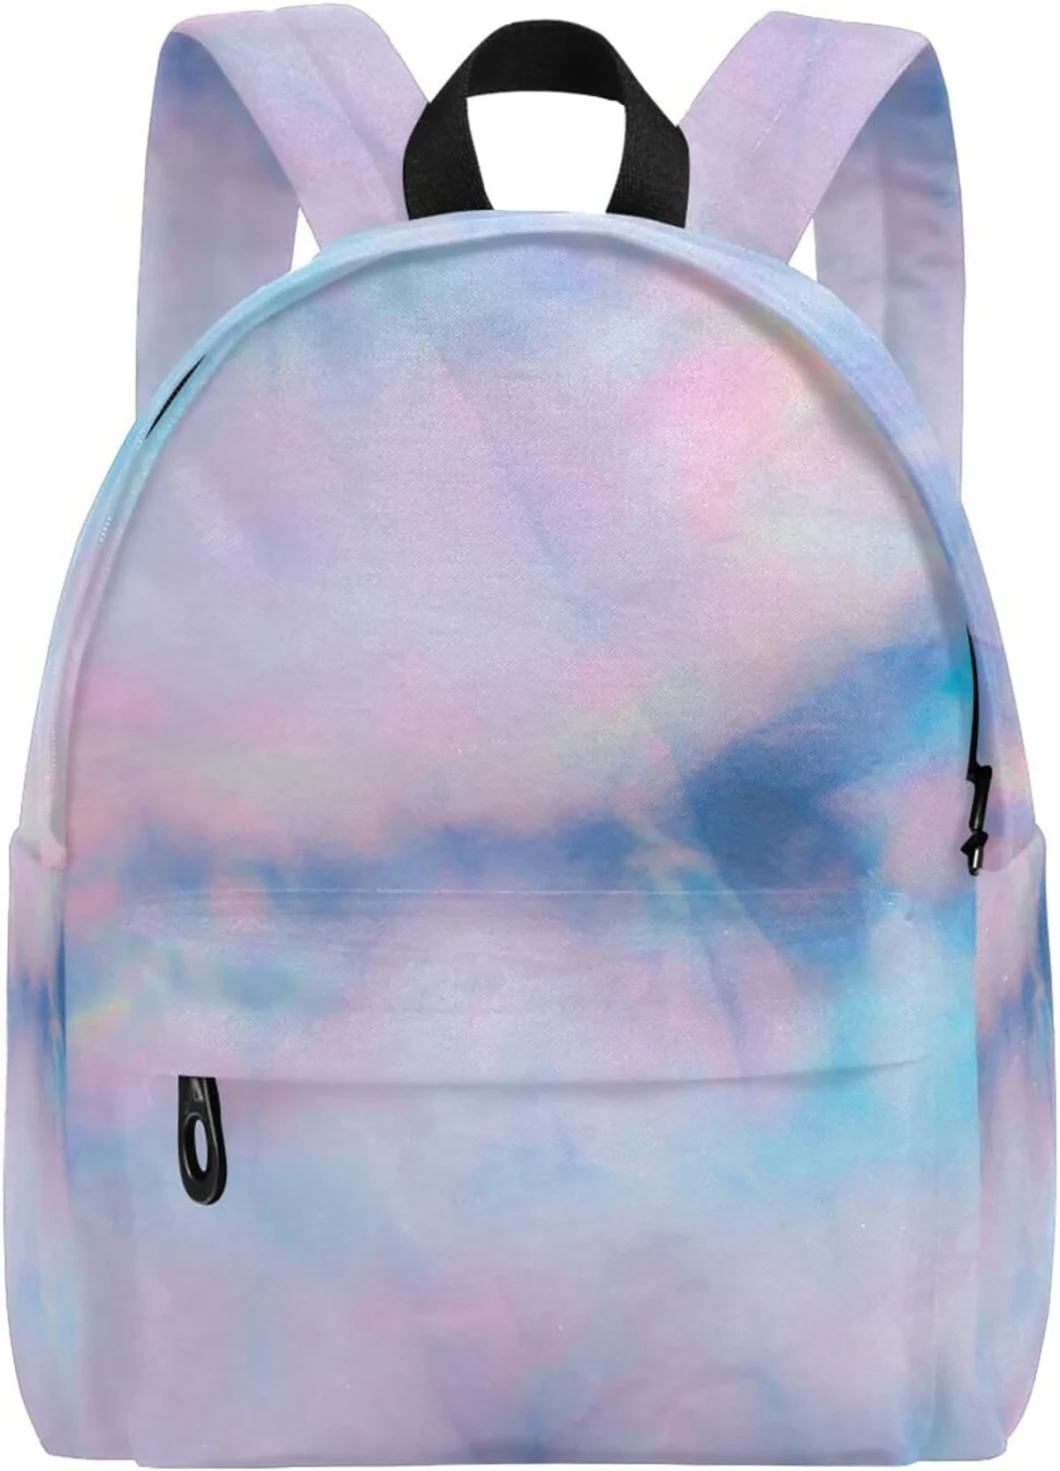 Kids Teen Boys Girls Student Laptop Backpack School Bag